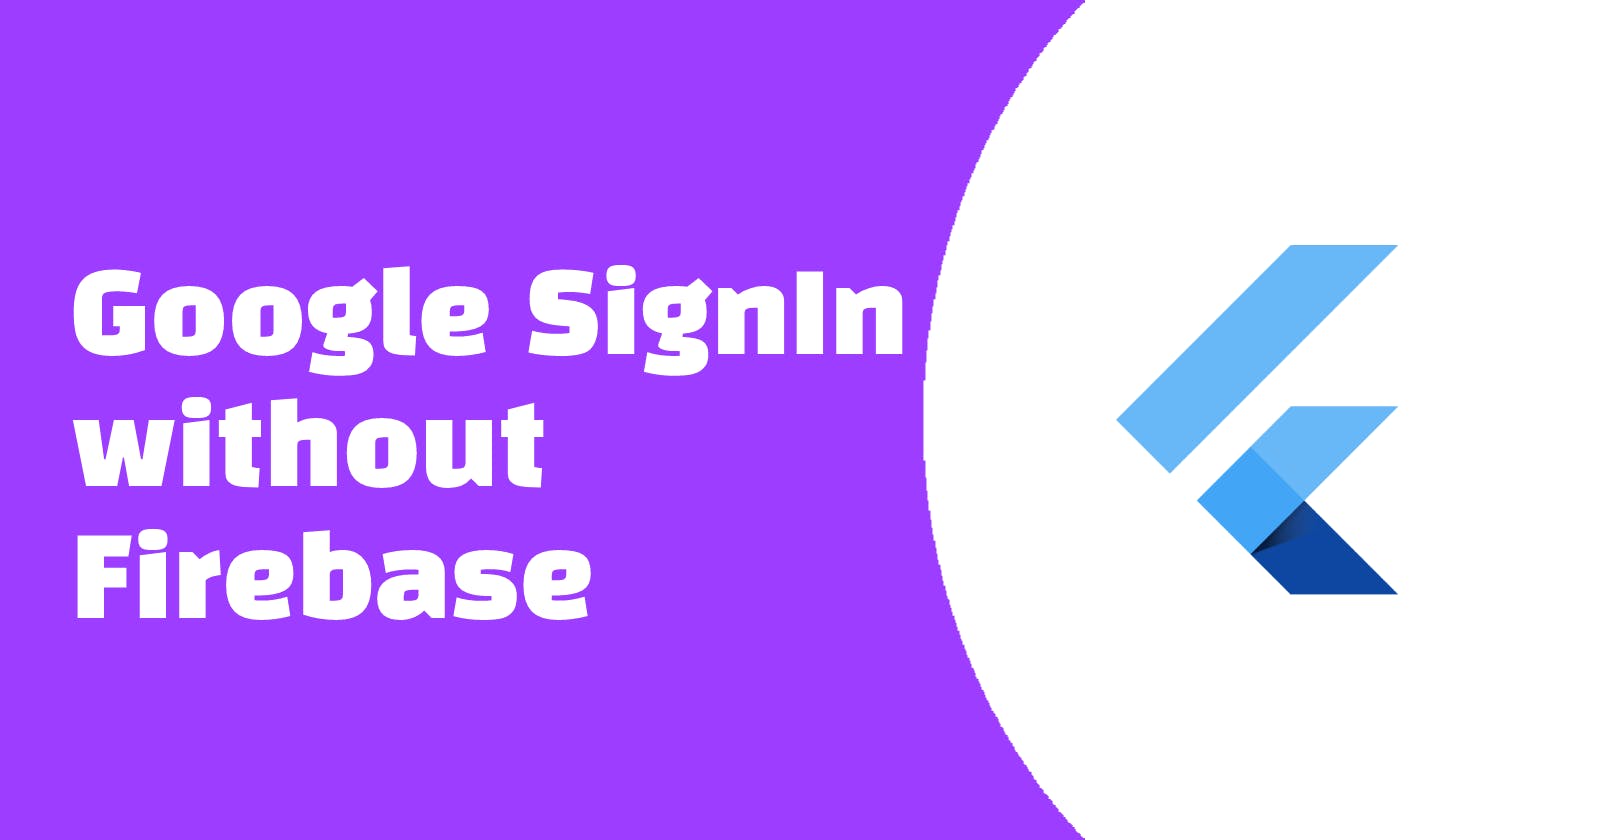 Google SignIn without Firebase